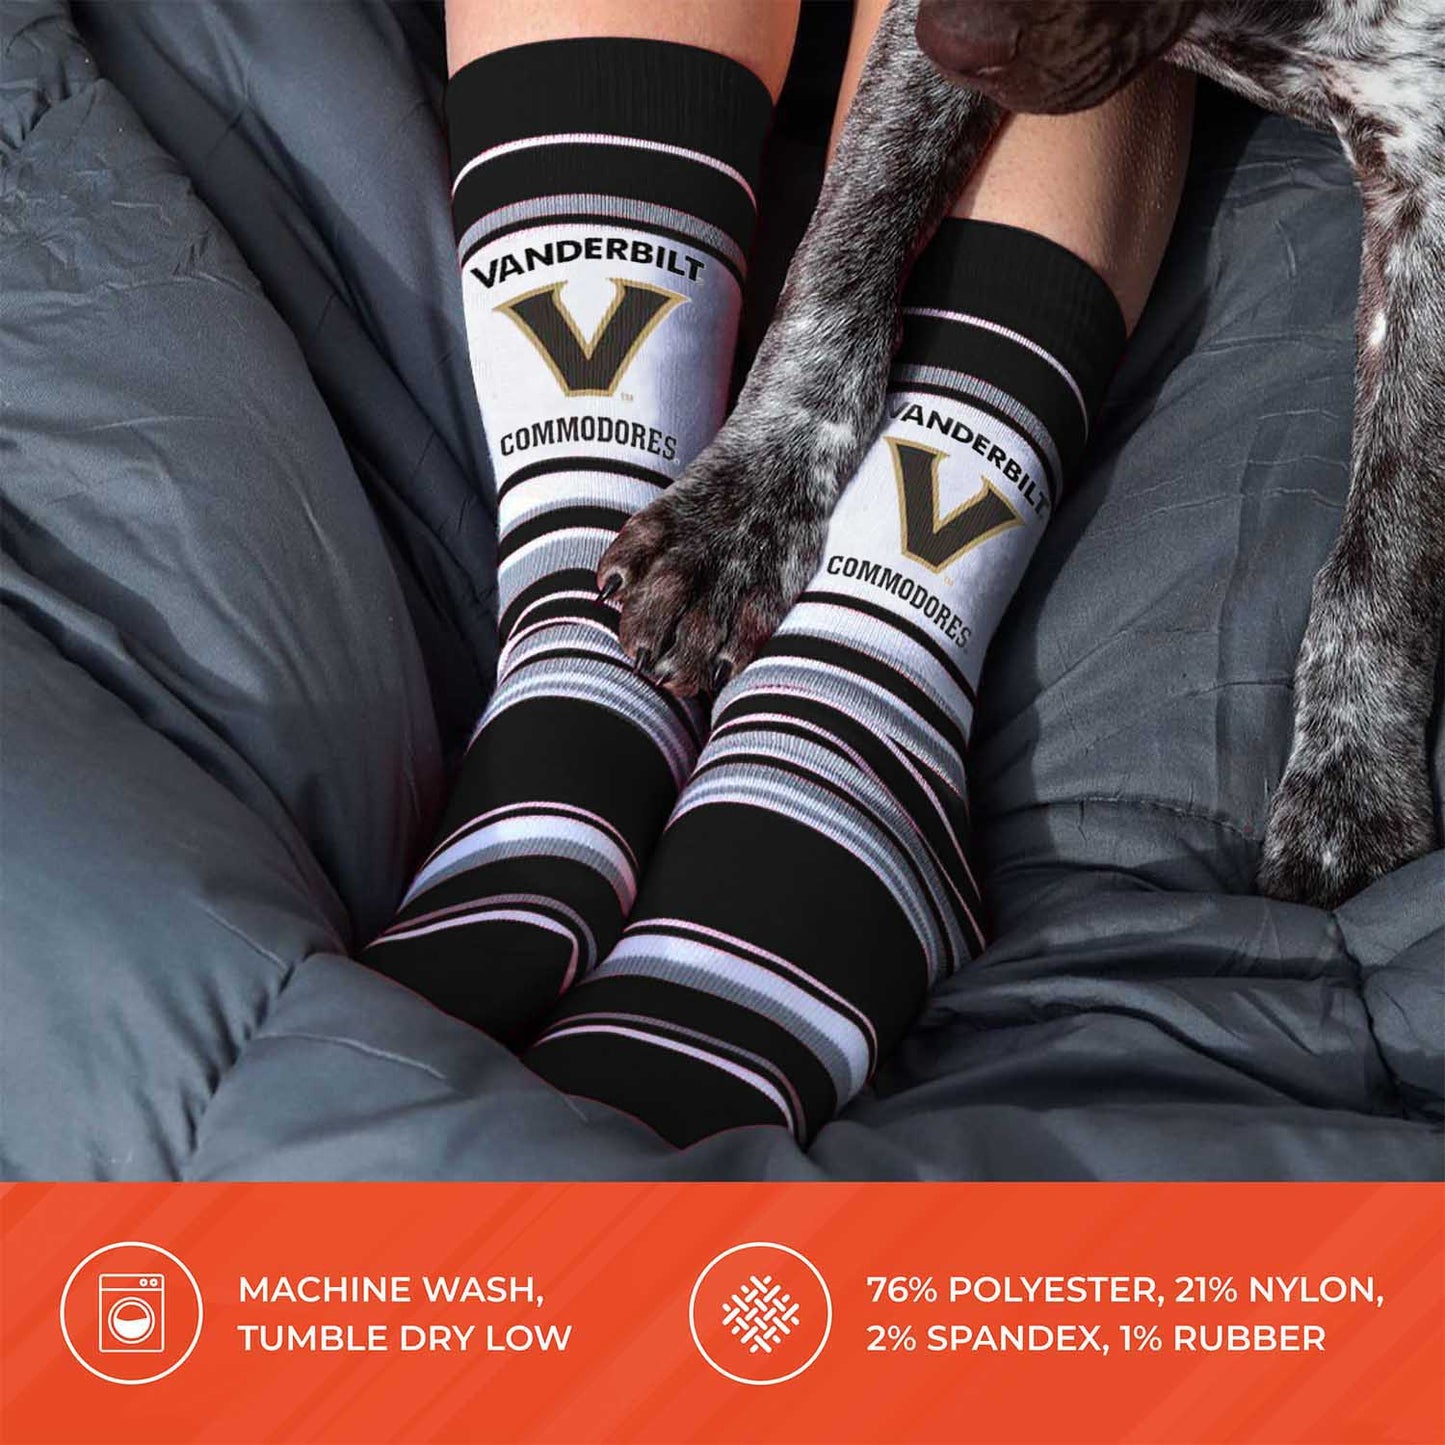 Vanderbilt Commodores Collegiate University Striped Dress Socks - Black